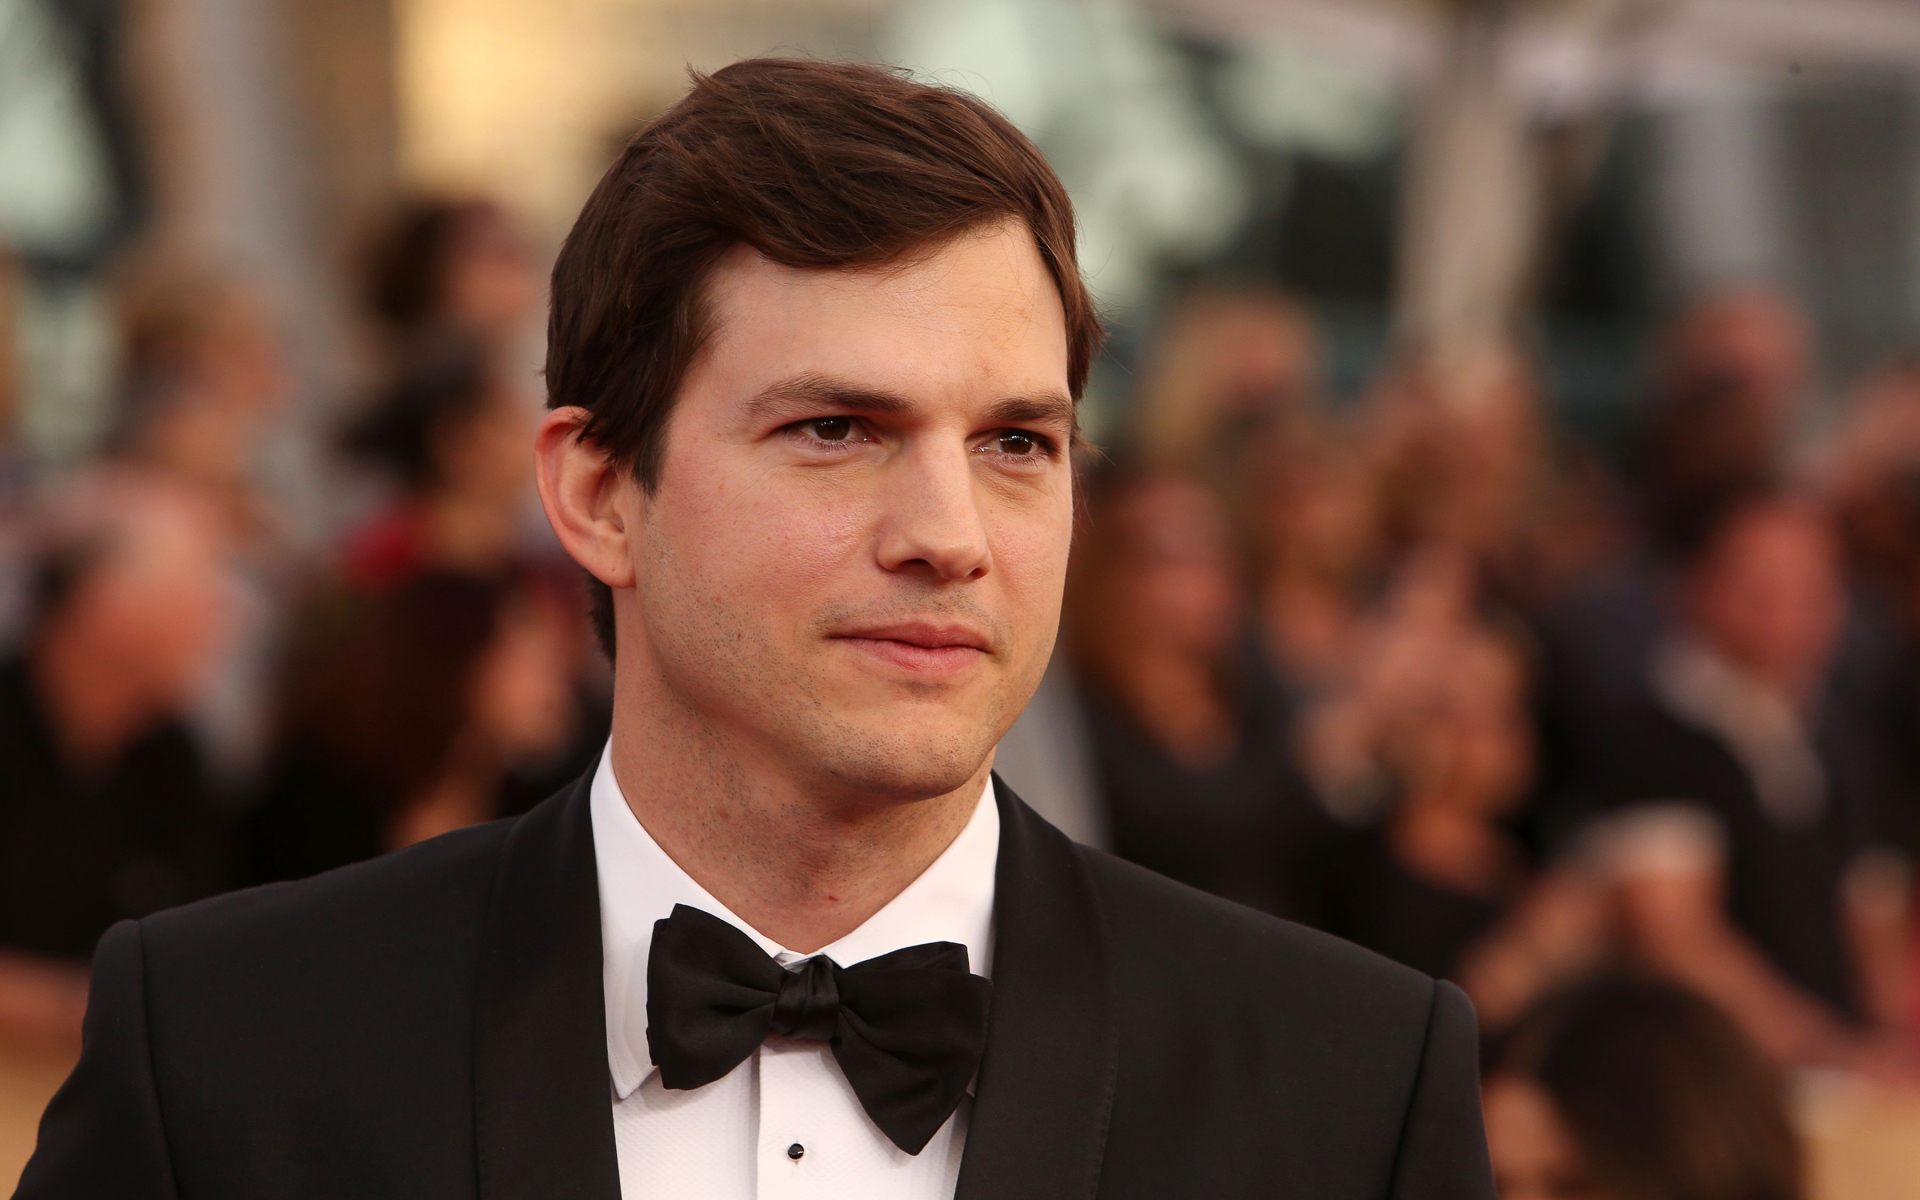 Handsome stylish man, actor Ashton Kutcher in suit